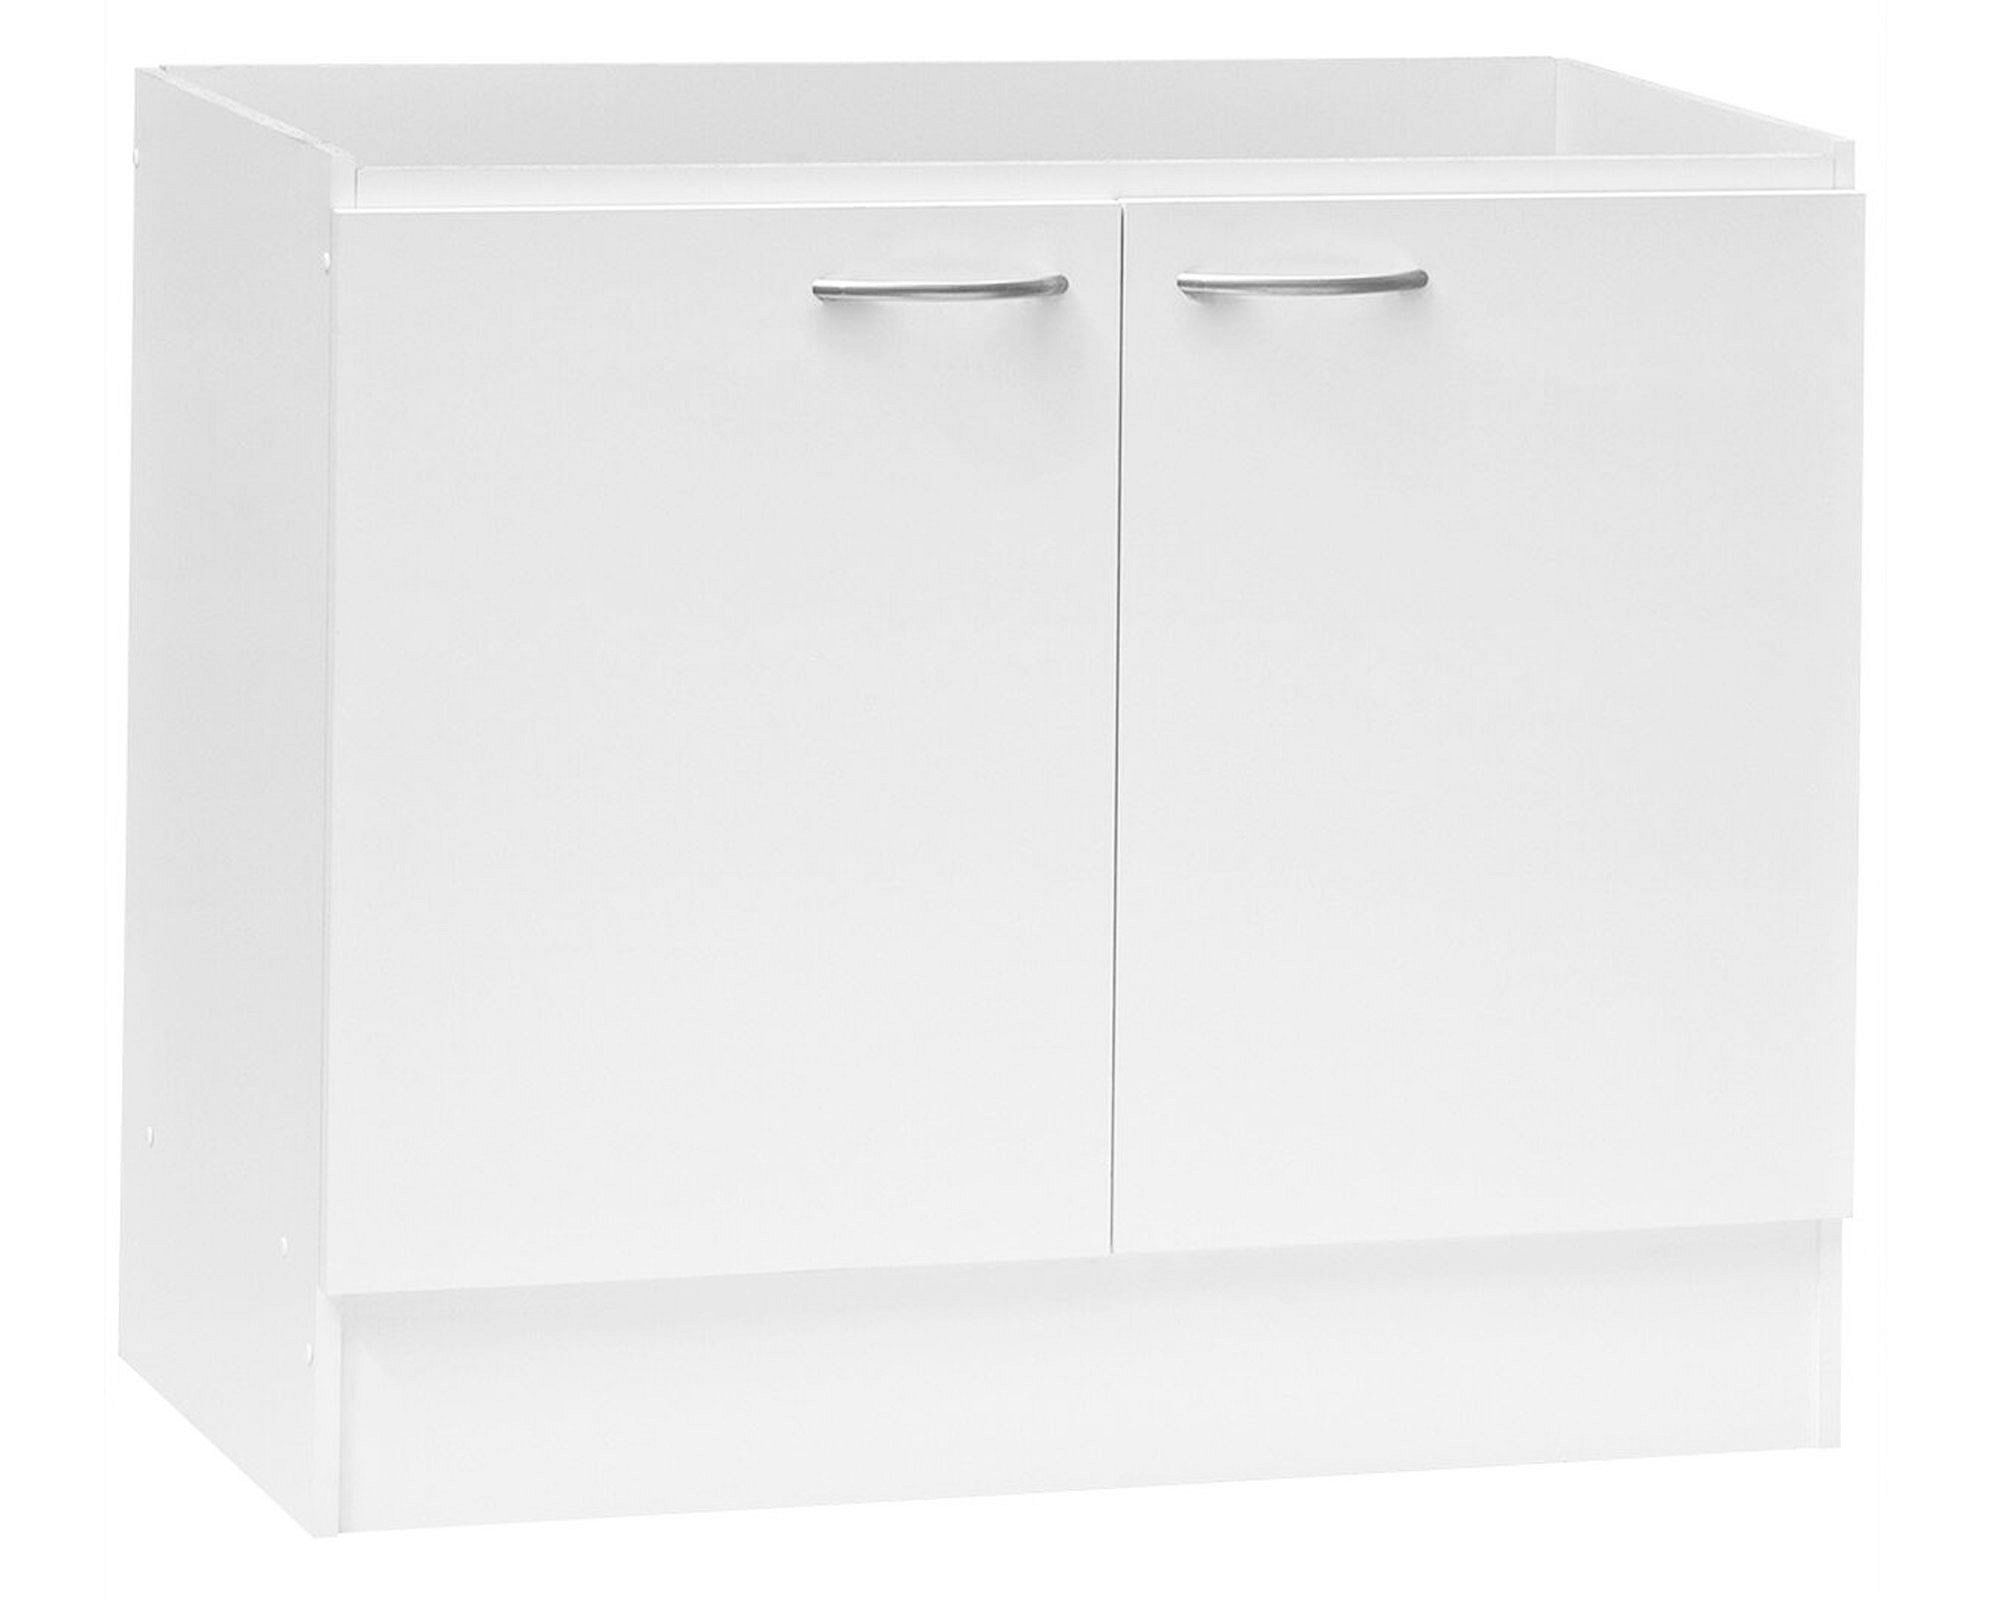 VATTUDALEN Lavaplatos simple con escurridor, acero inoxidable, 86x47 cm -  IKEA Chile